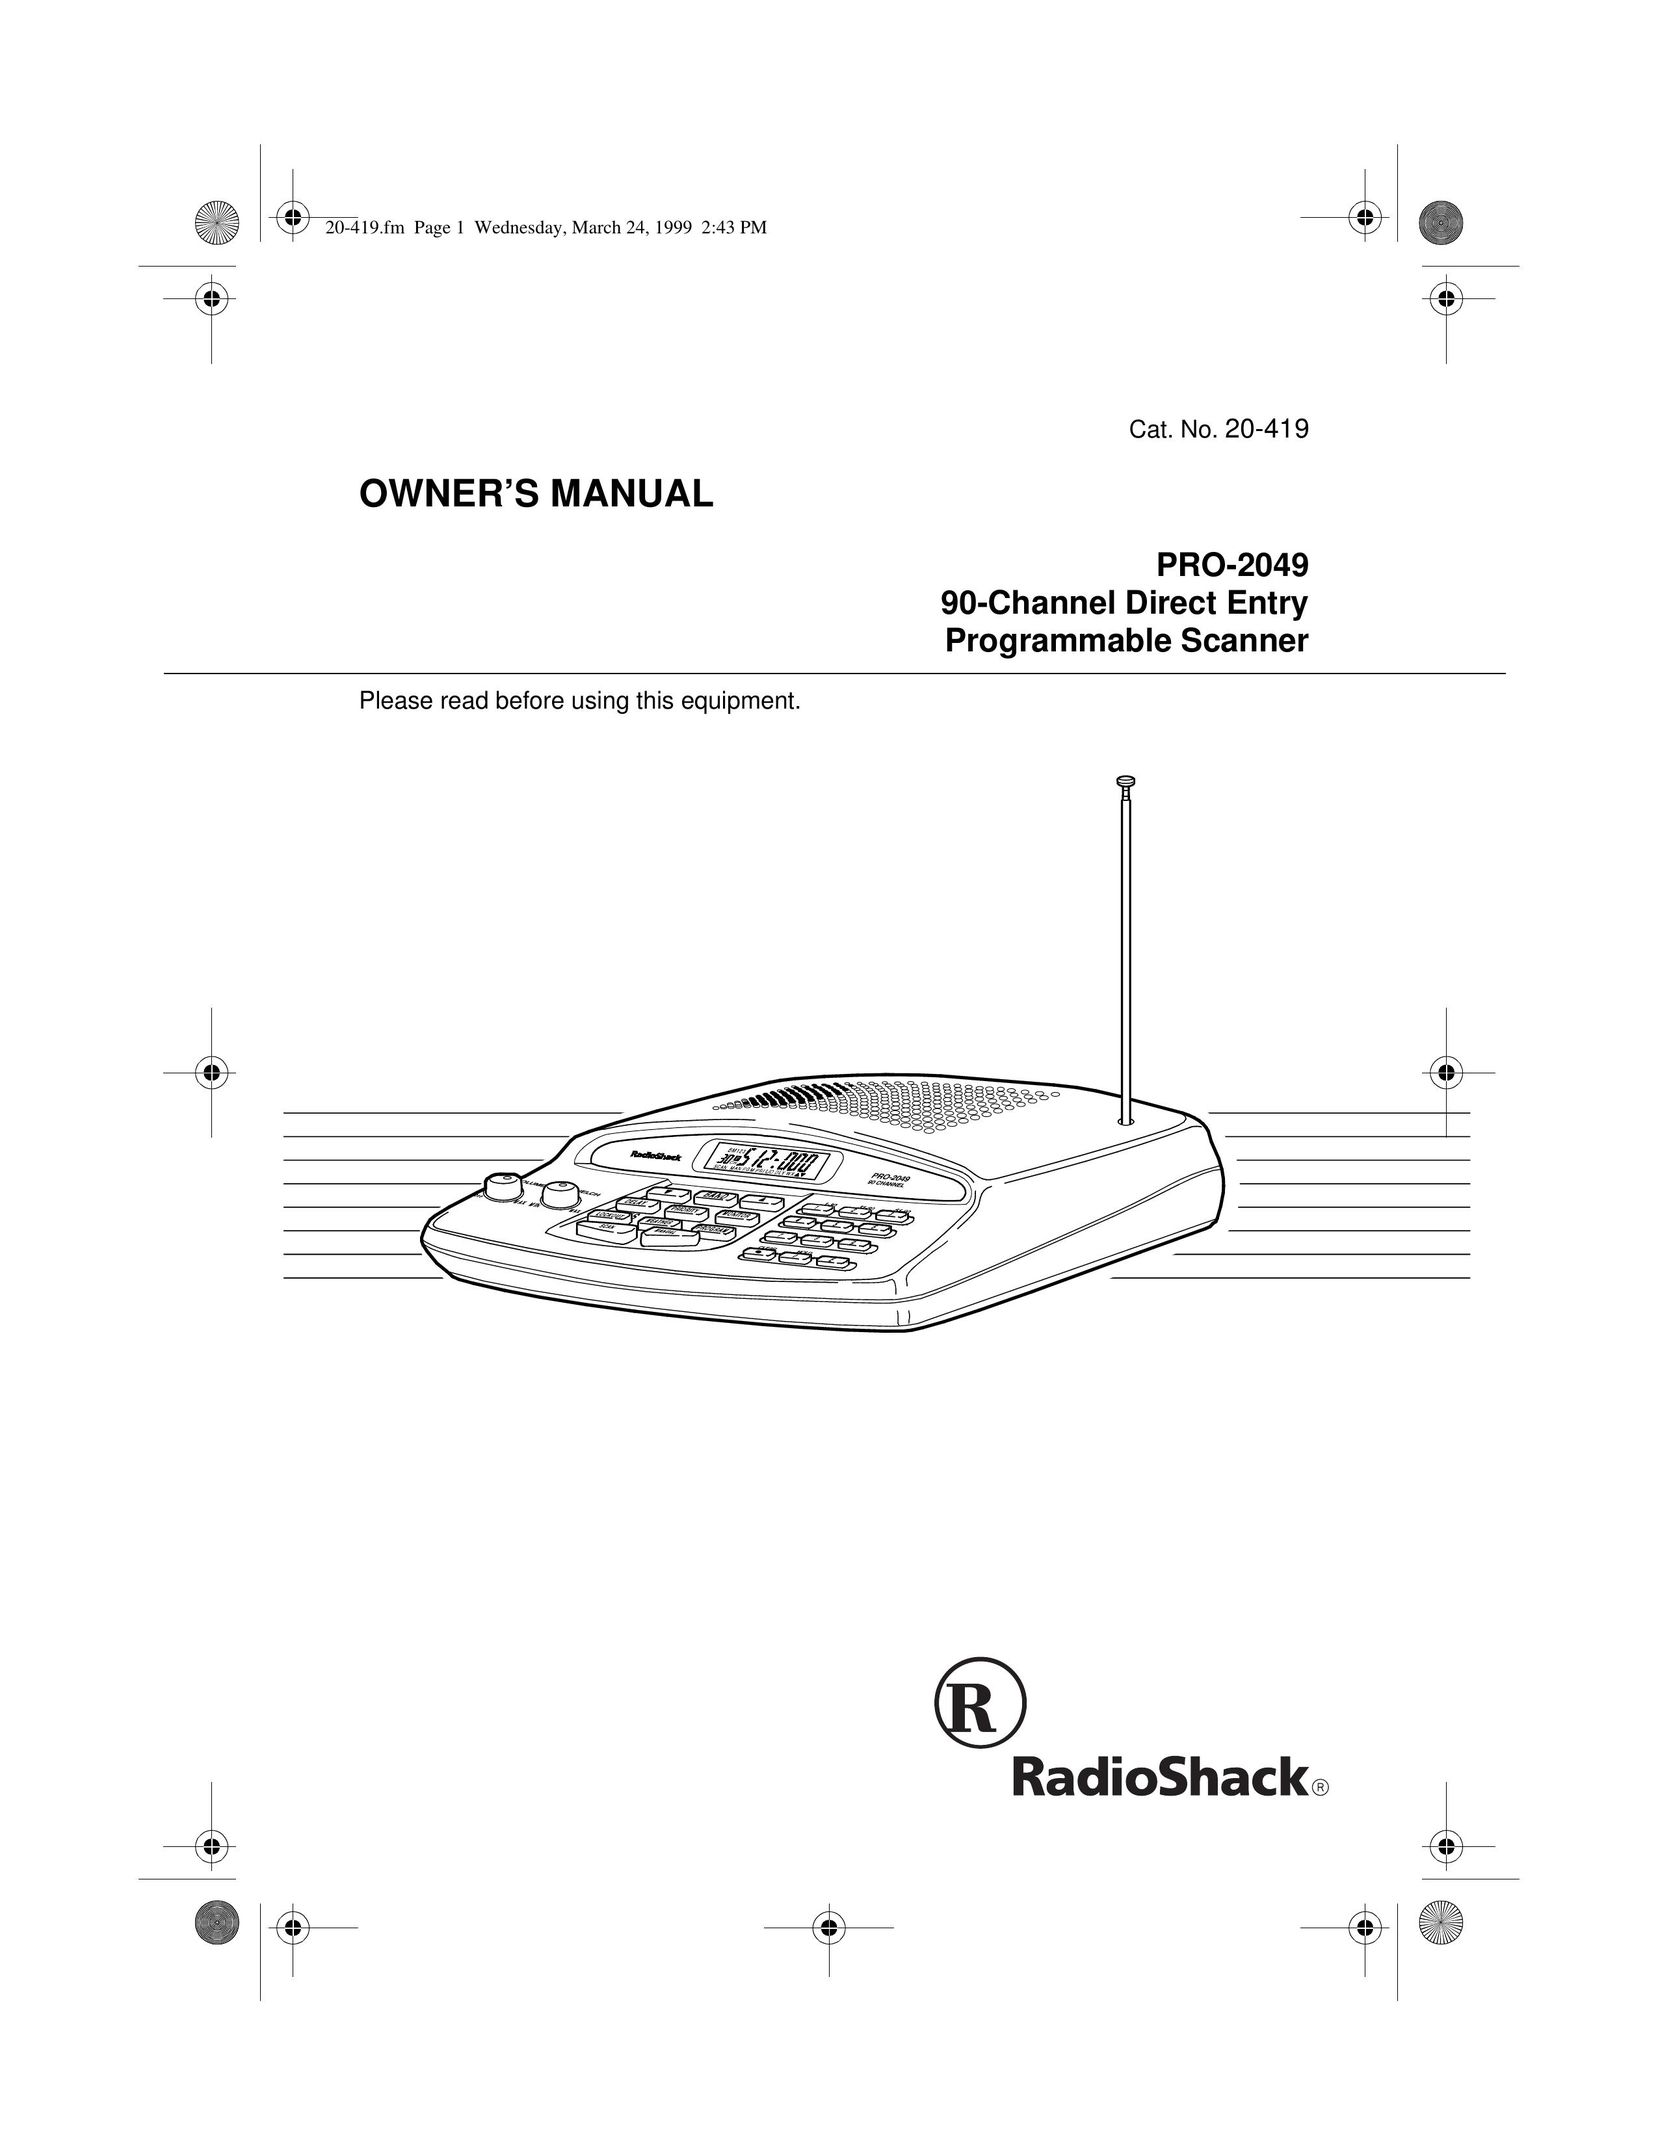 Radio Shack PRO-2049 Scanner User Manual